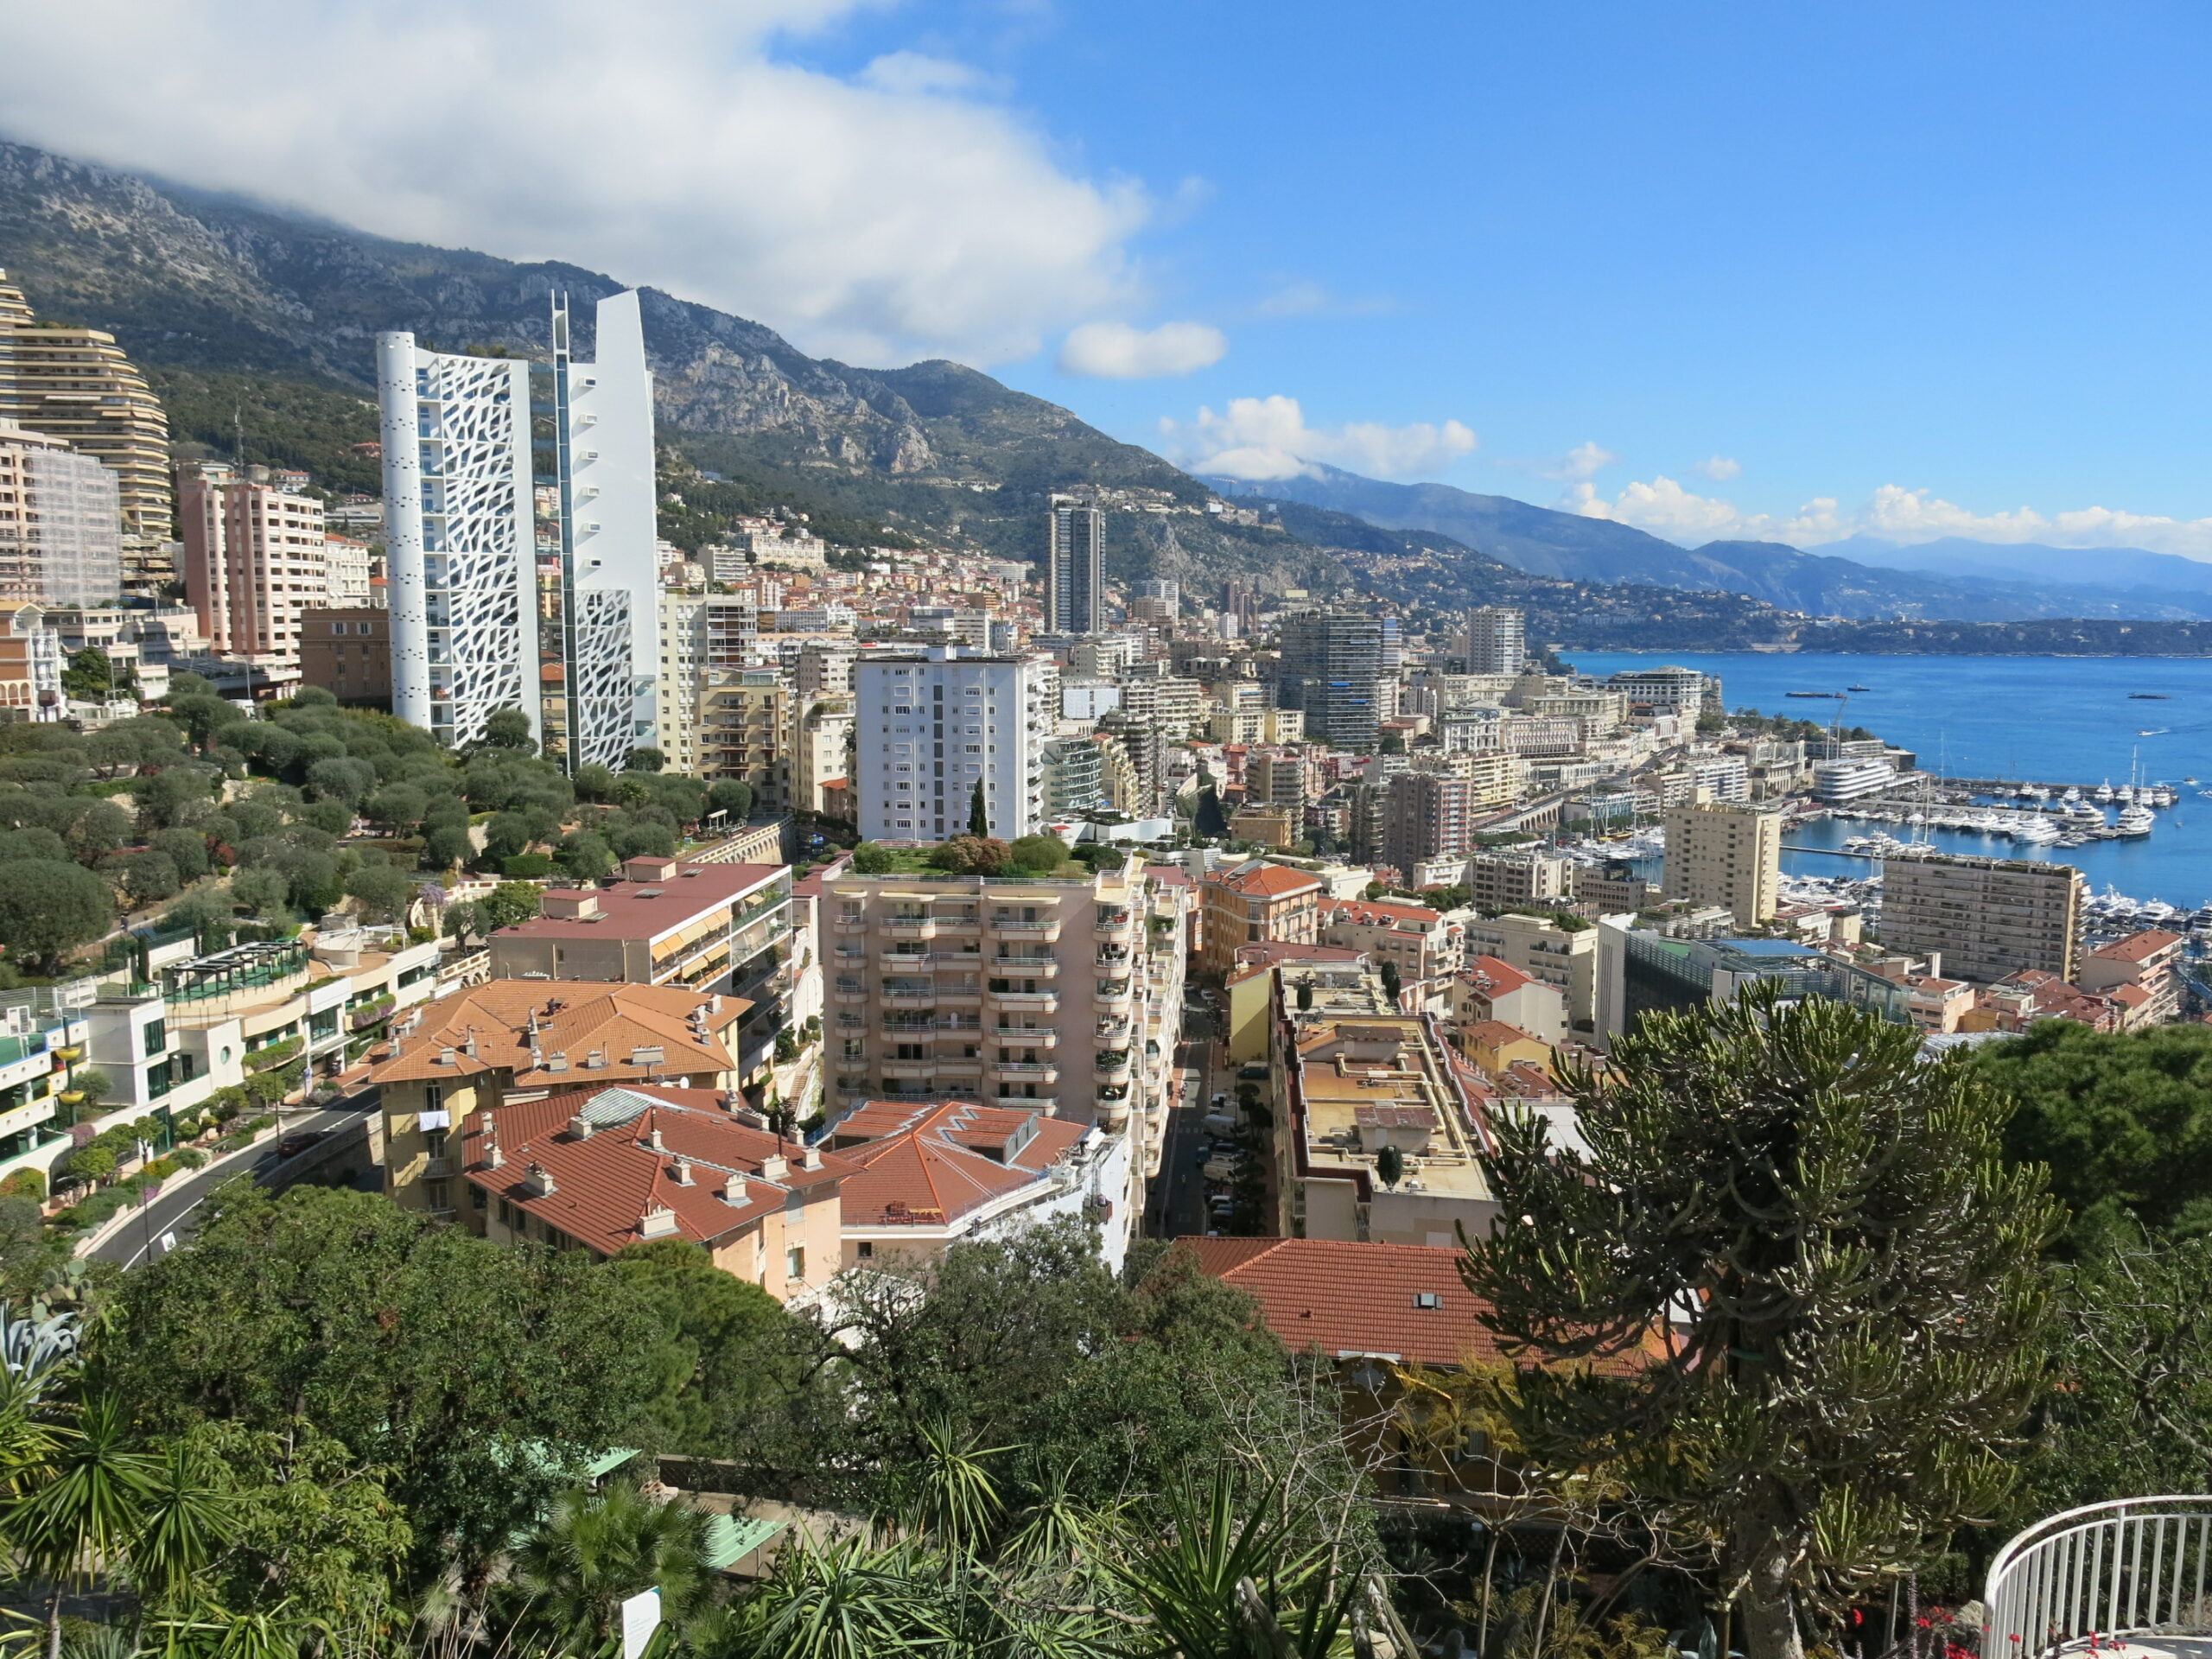 Highest peak of Monaco